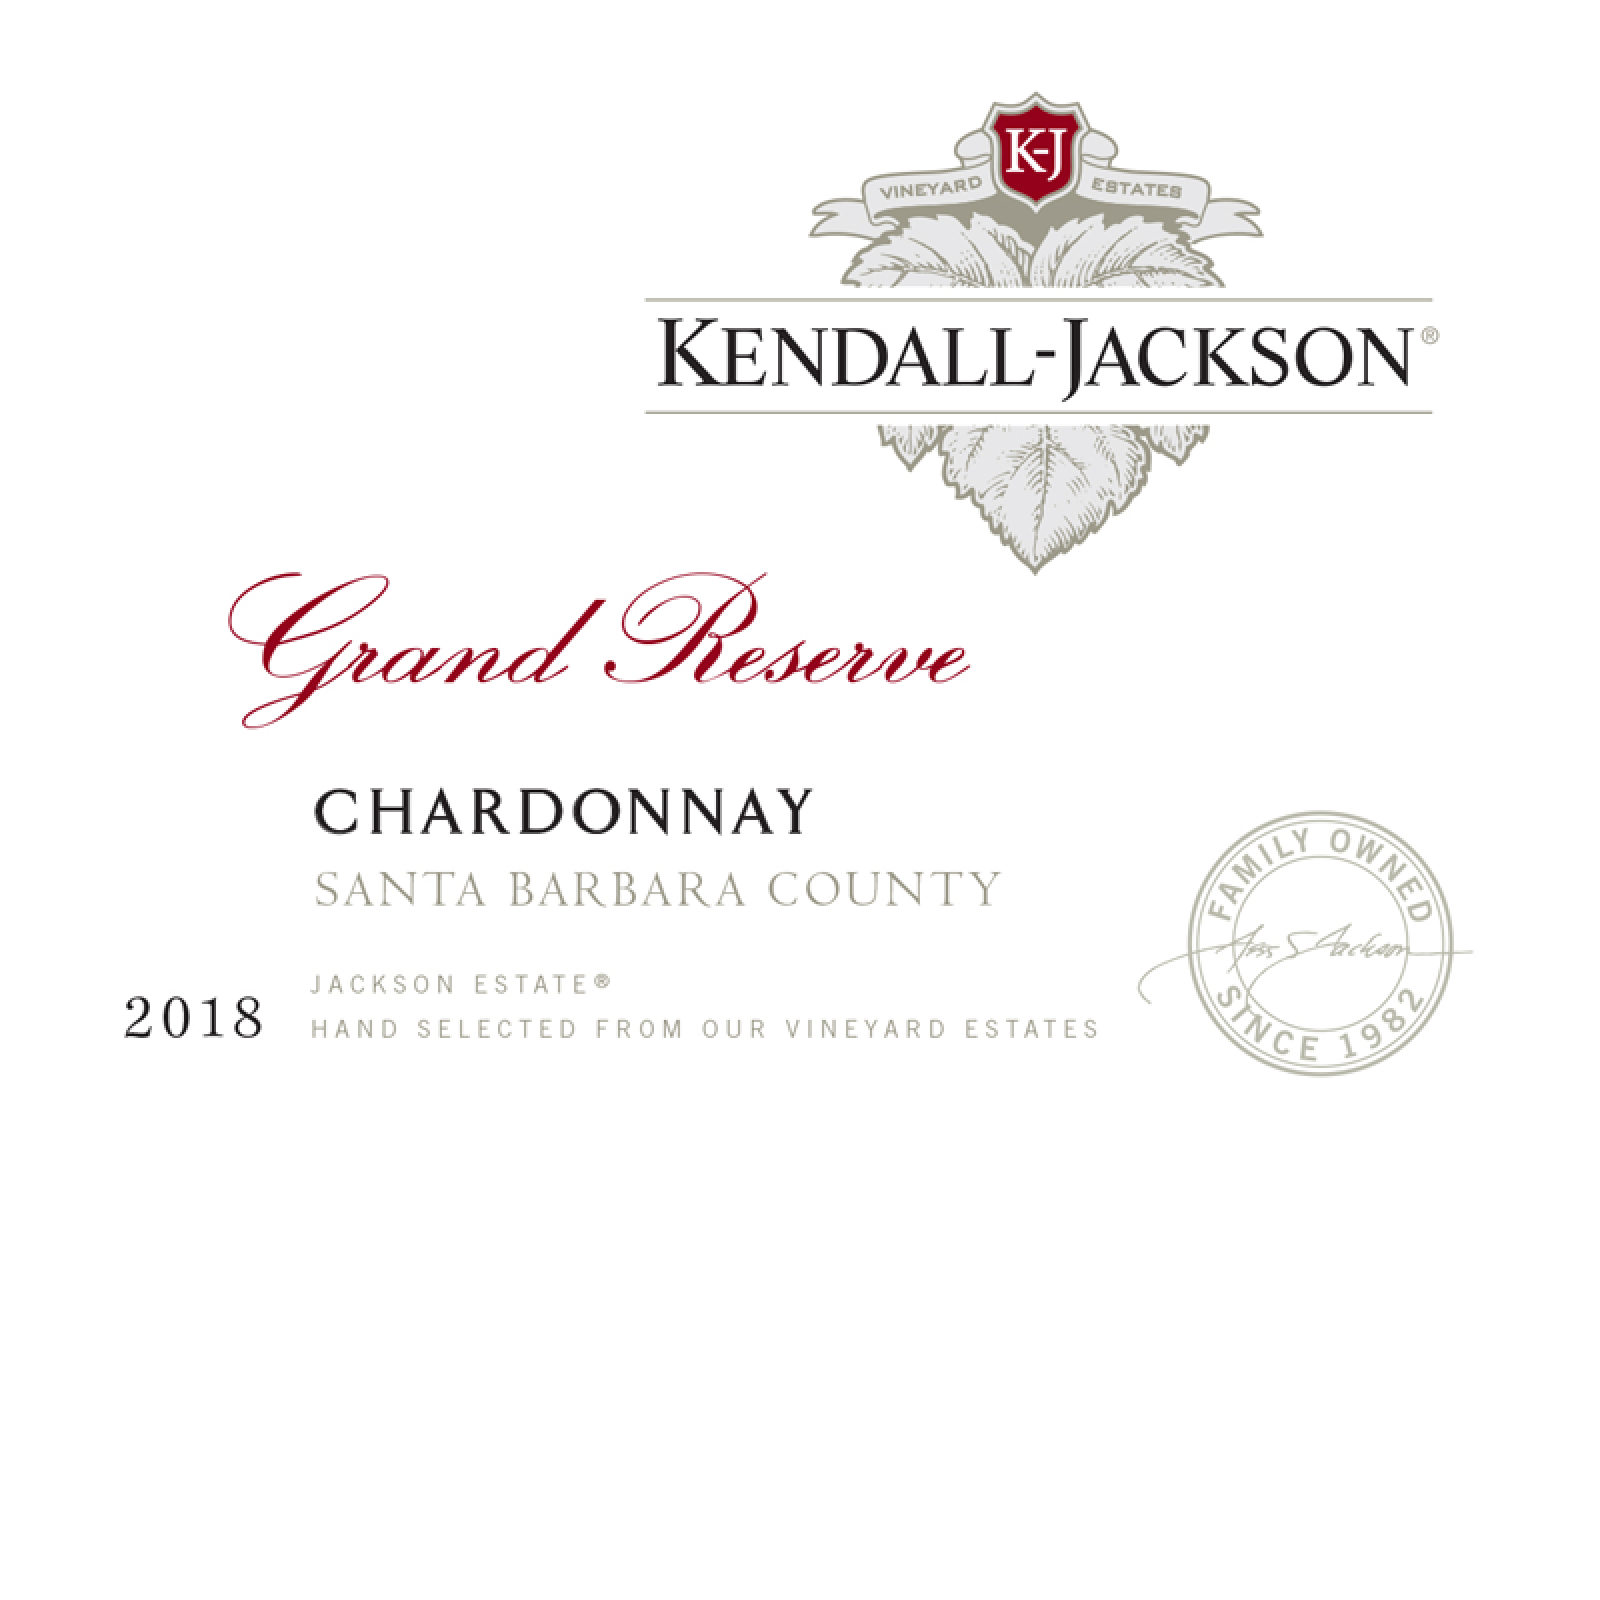 Kendall-Jackson Grand Reserve Chardonnay 2018